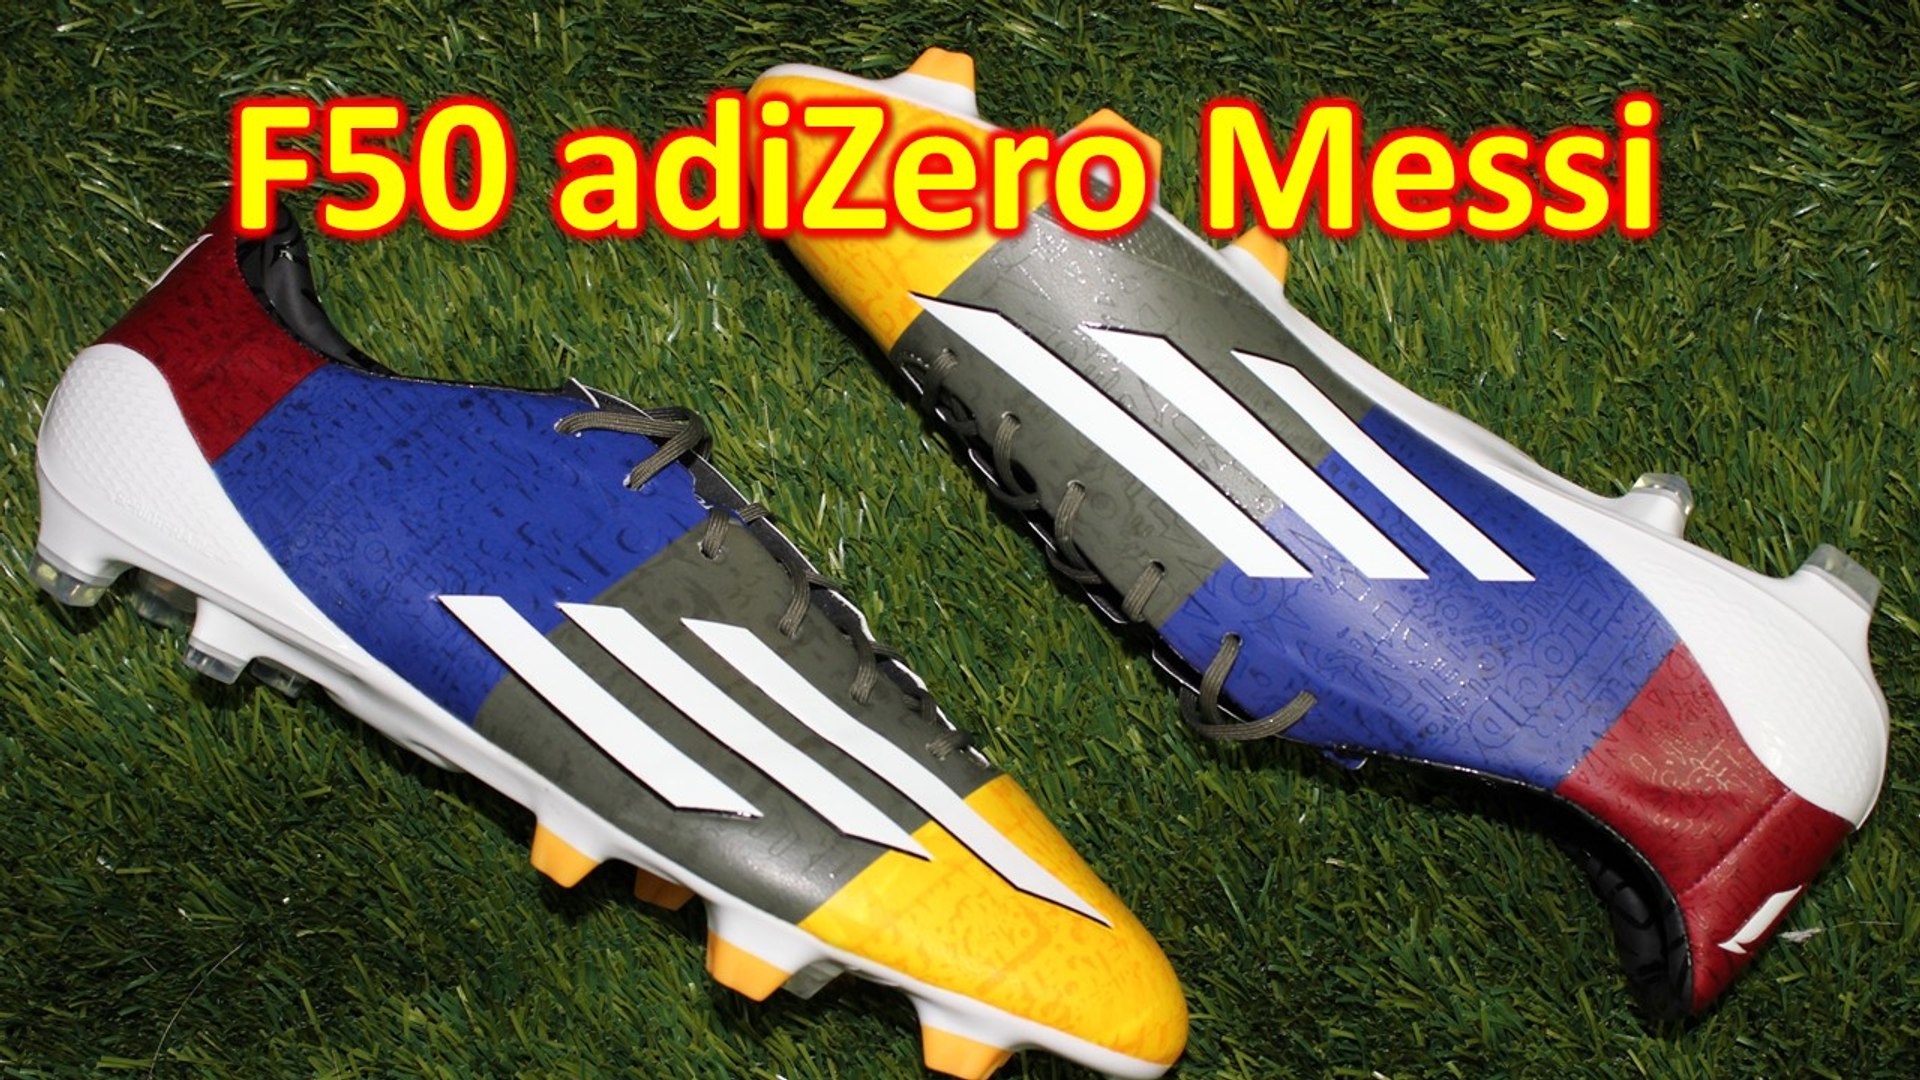 Messi Blaugrana Adidas F50 adizero 2014 - Review + On Feet - video  Dailymotion